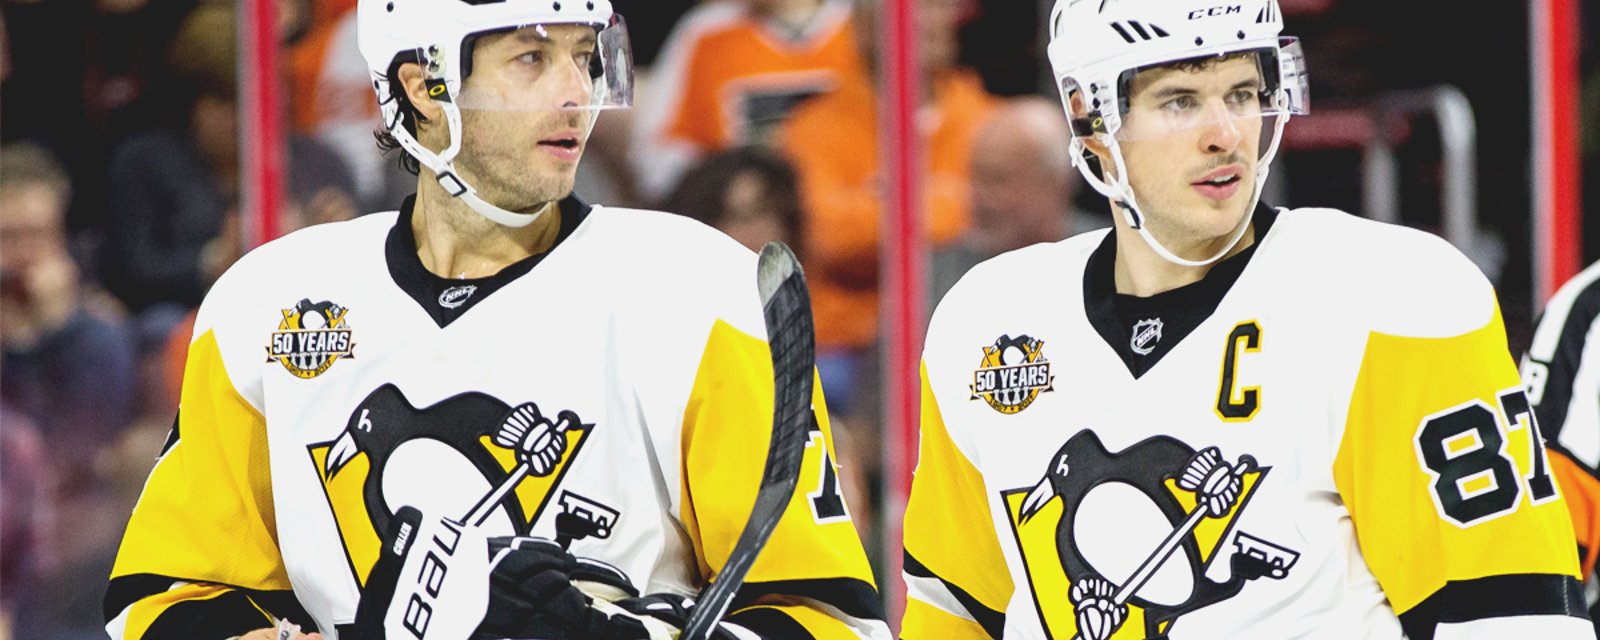 FURIOUS, Penguins’ veteran Matt Cullen has HARSH comments on his team.